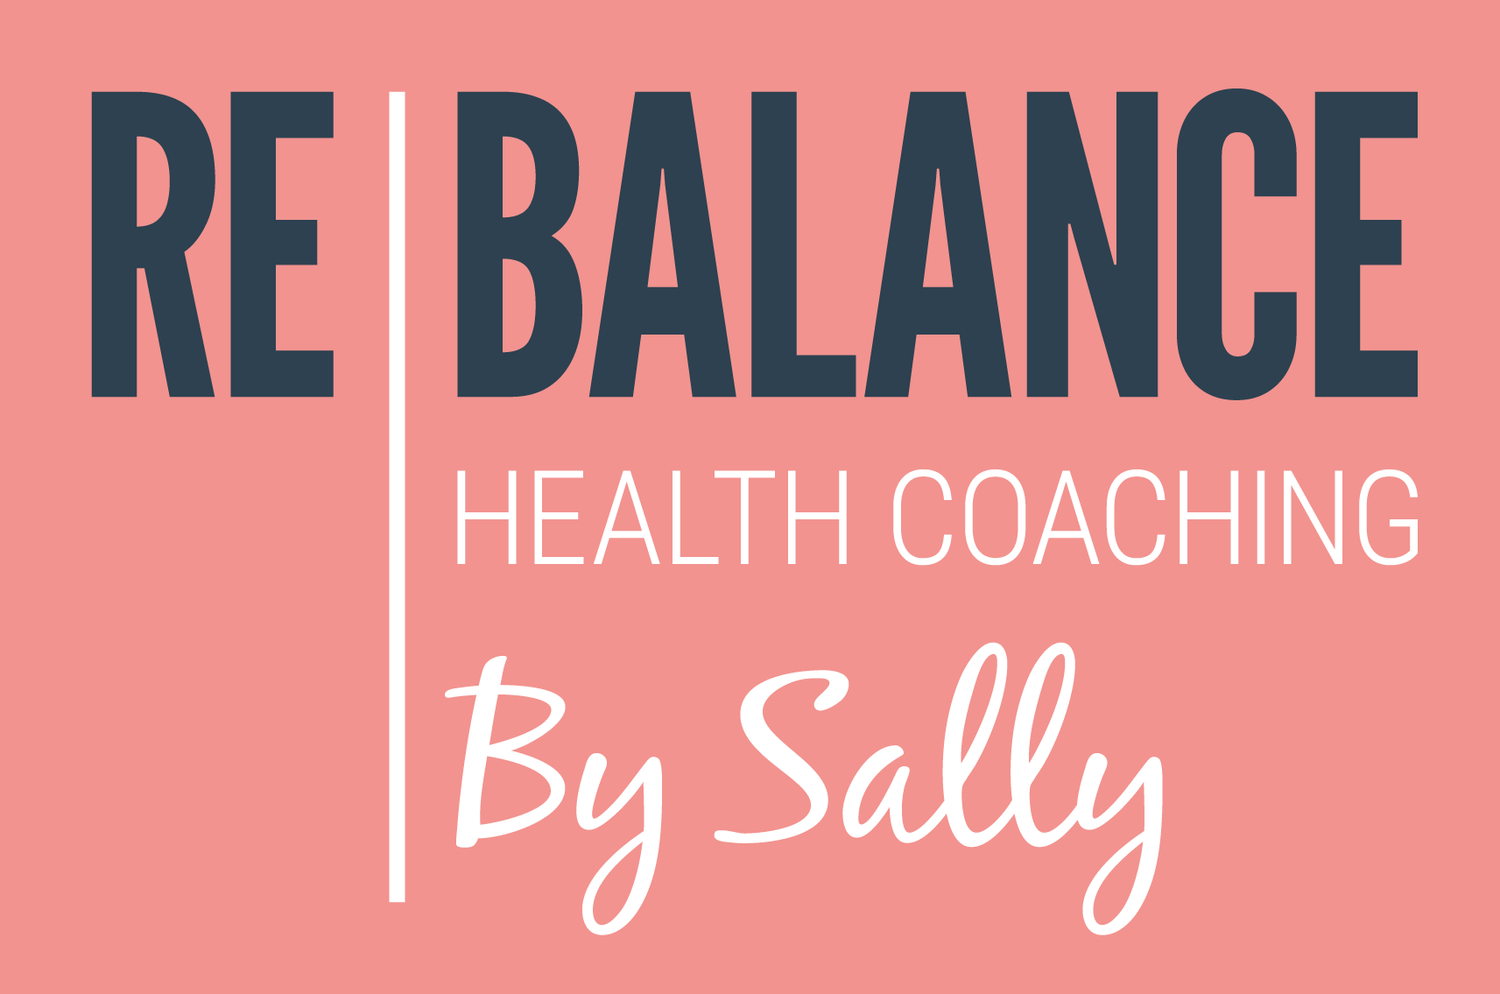 Re-Balance By Sally